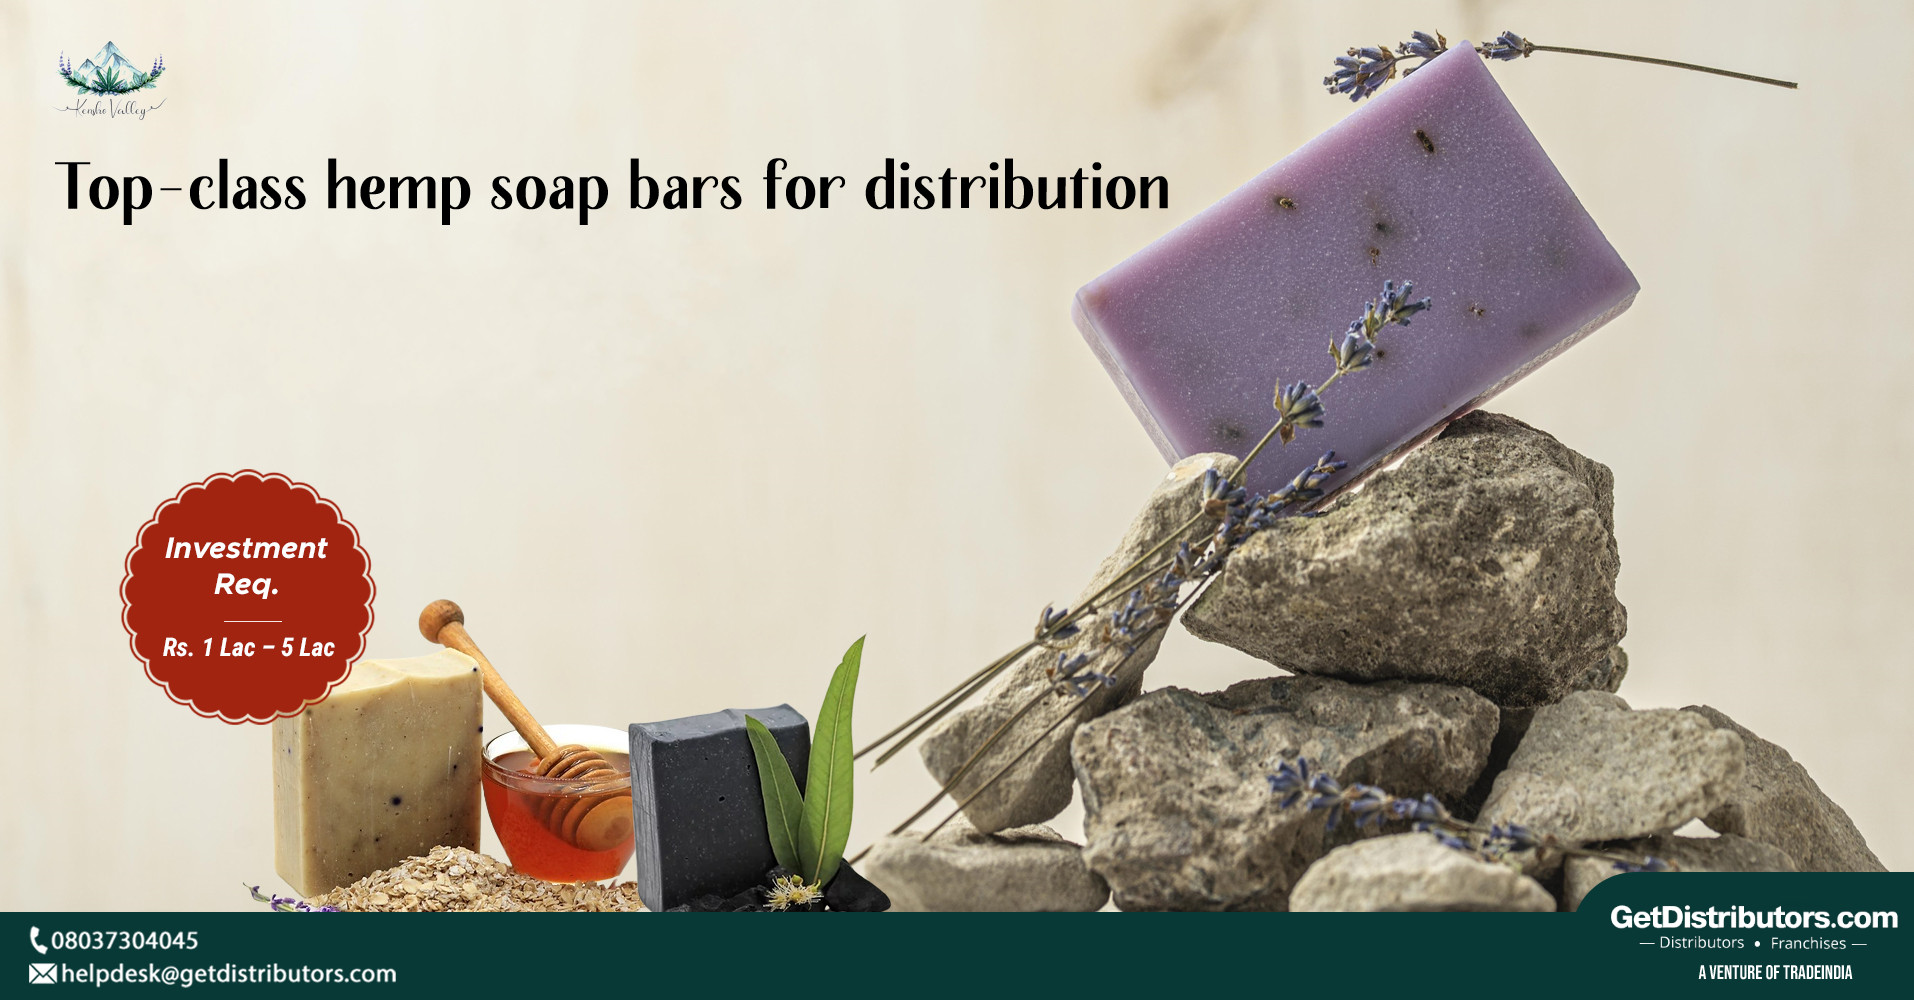 Top-class hemp soap bars for distribution